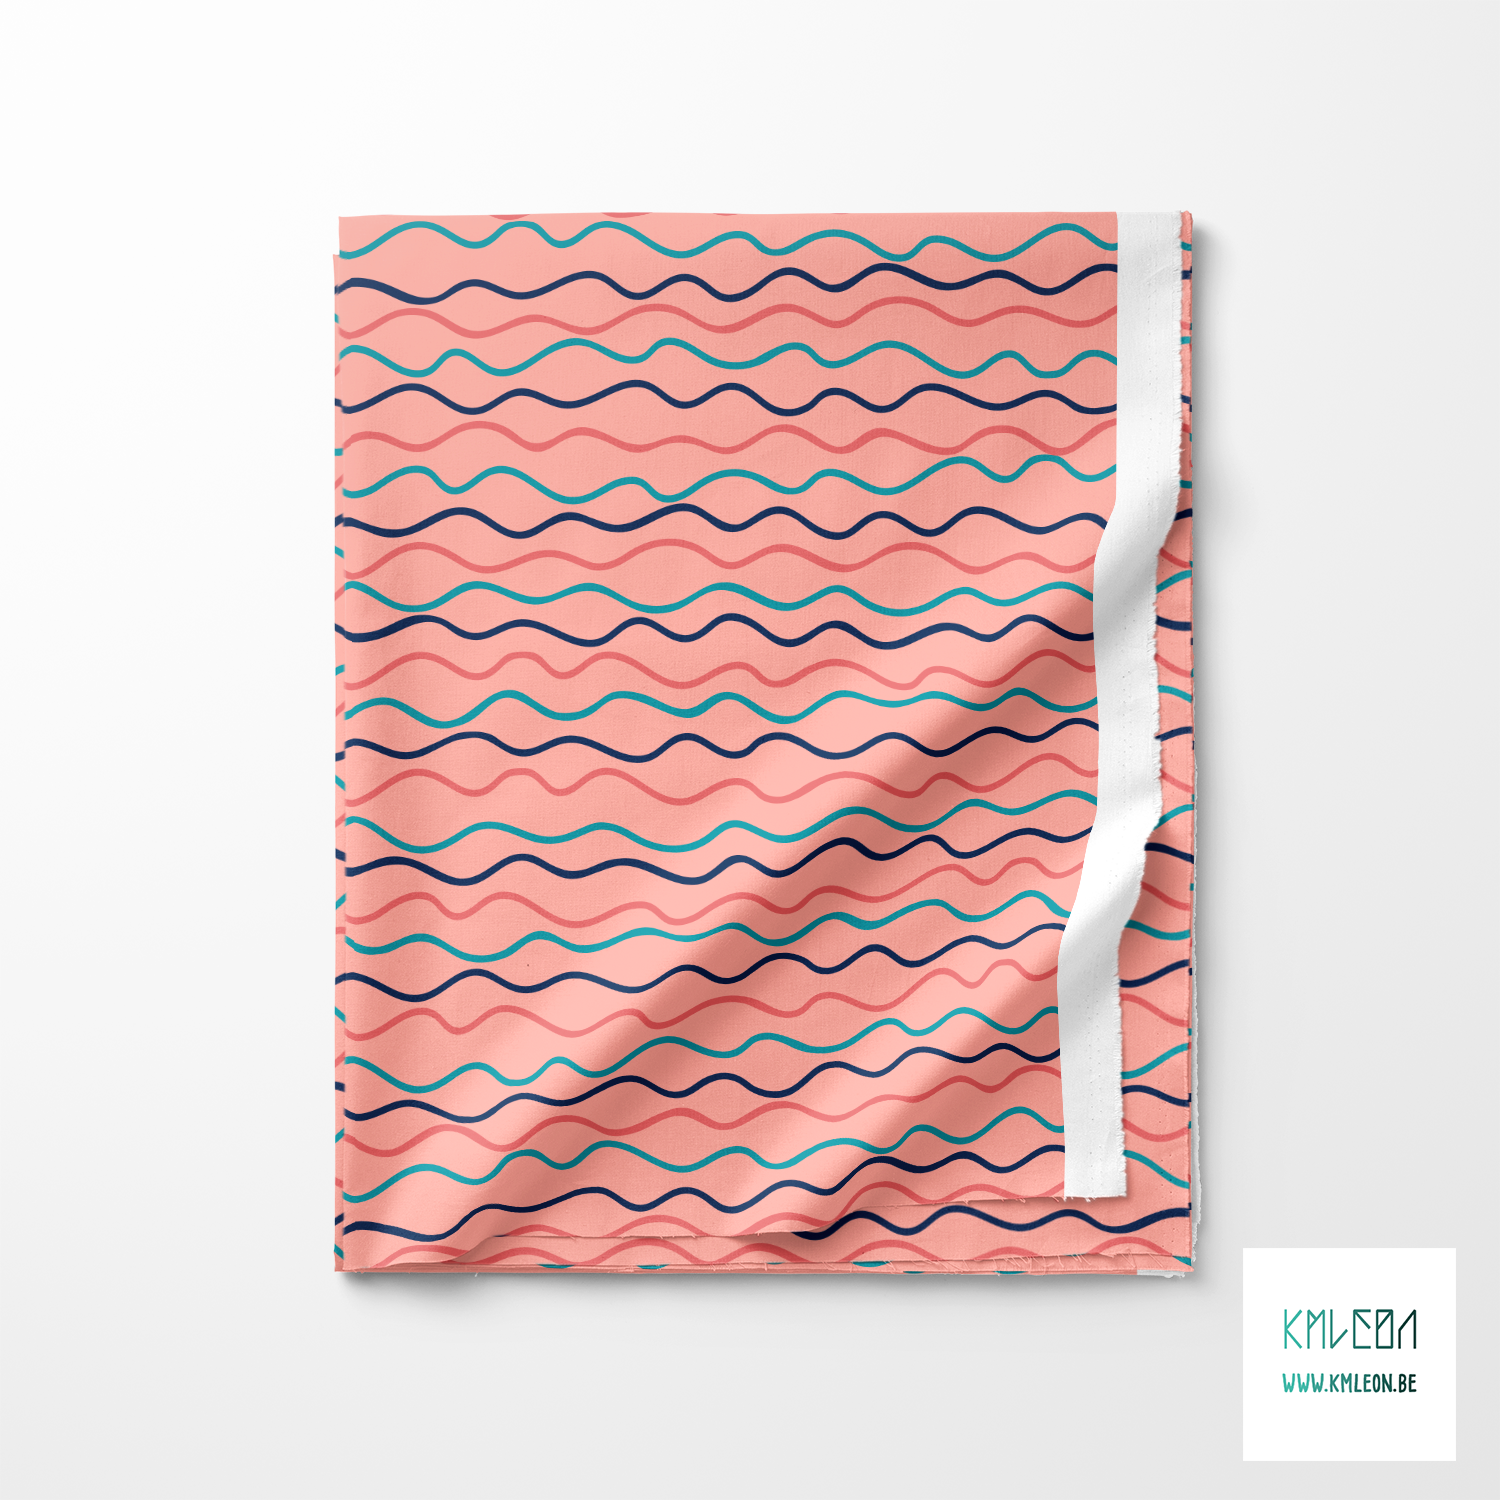 Irregular teal, navy and pink waves fabric